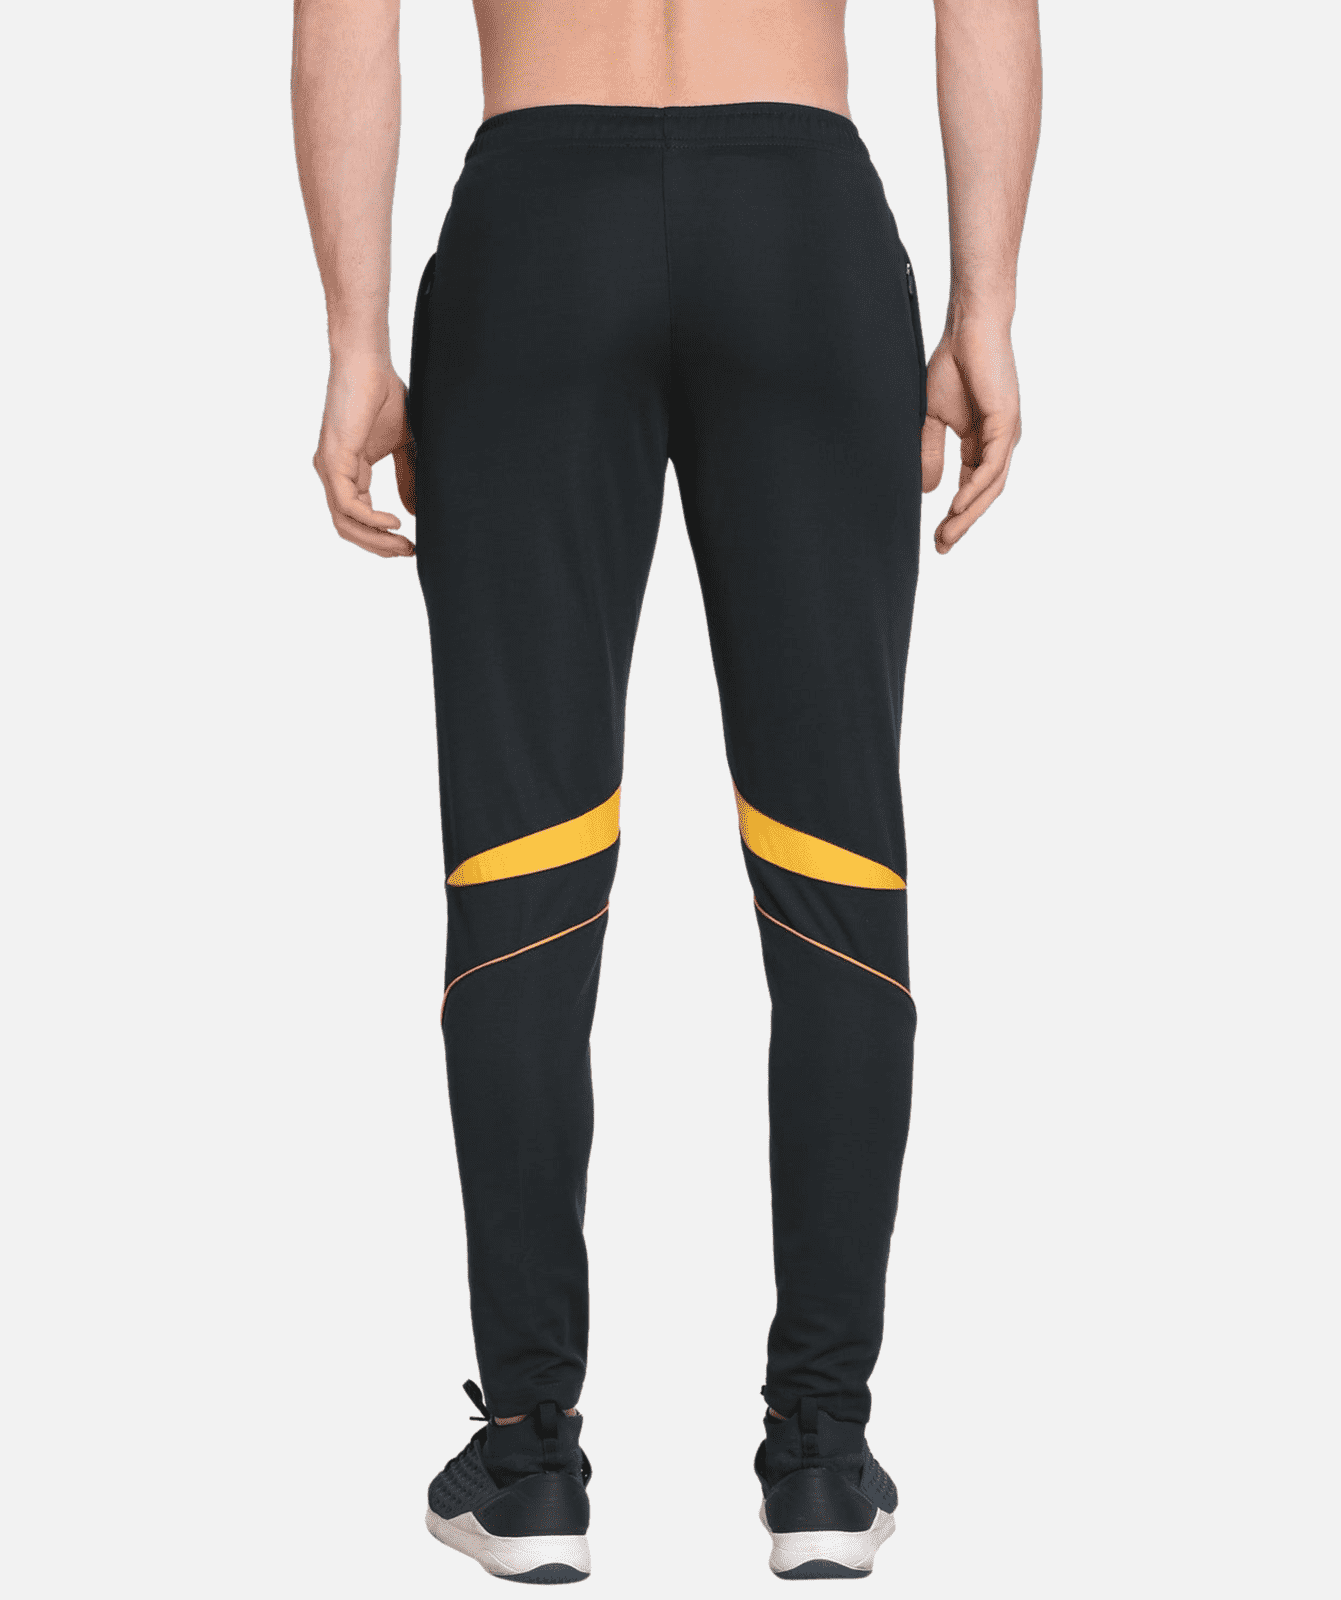 Cargo Pants For Men - Black Cargo Pants Fashion – TRIPR